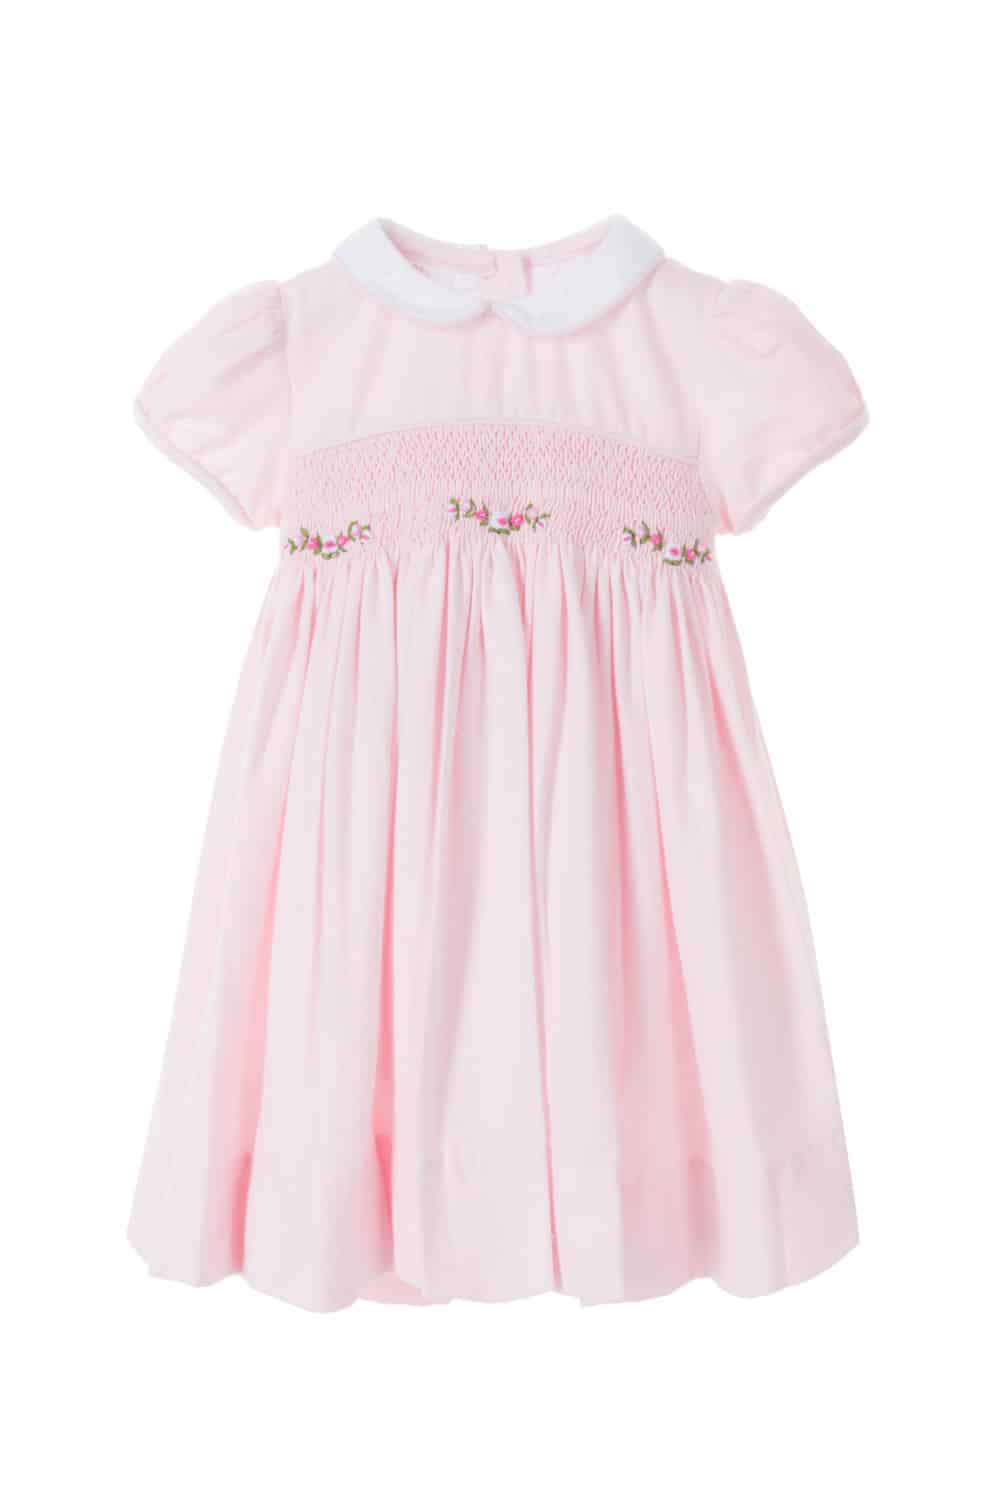 Smocked Dress Girls Baby Toddler Pink Stripe Summer Embroidered Flower Collar 